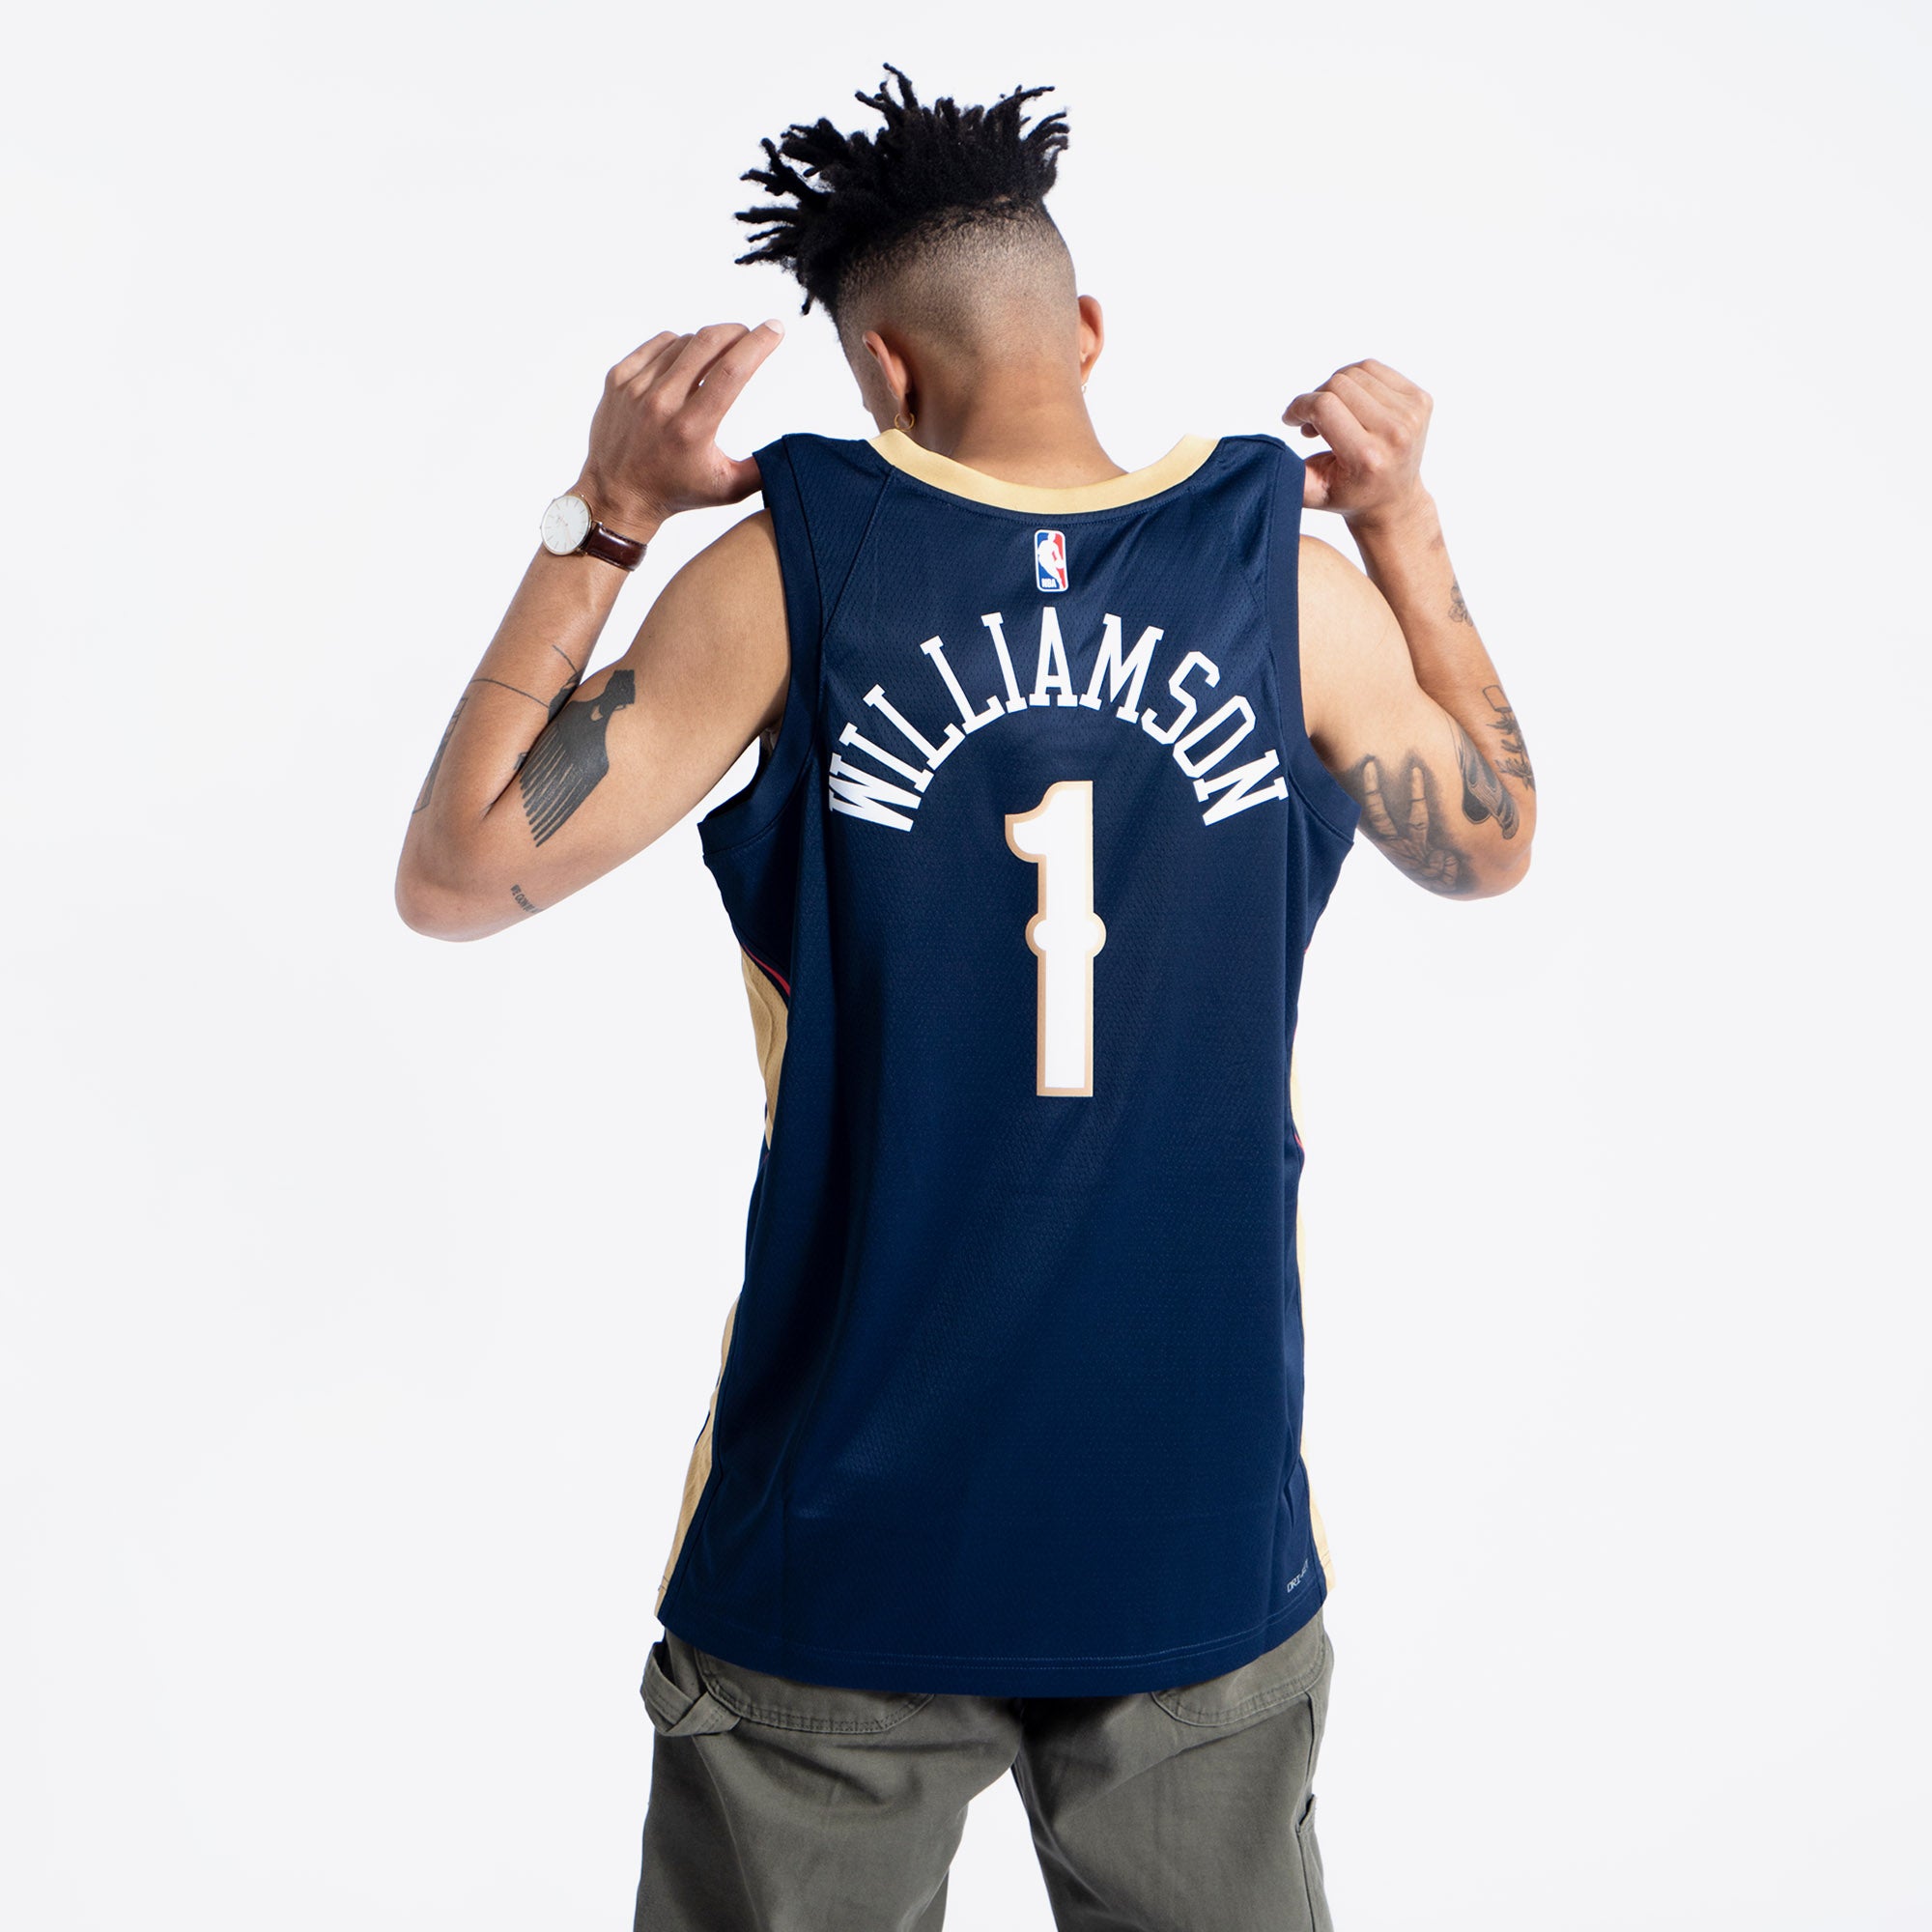 Nike Męska Koszulka Nba Swingman Zion Williamson Pelicans Icon